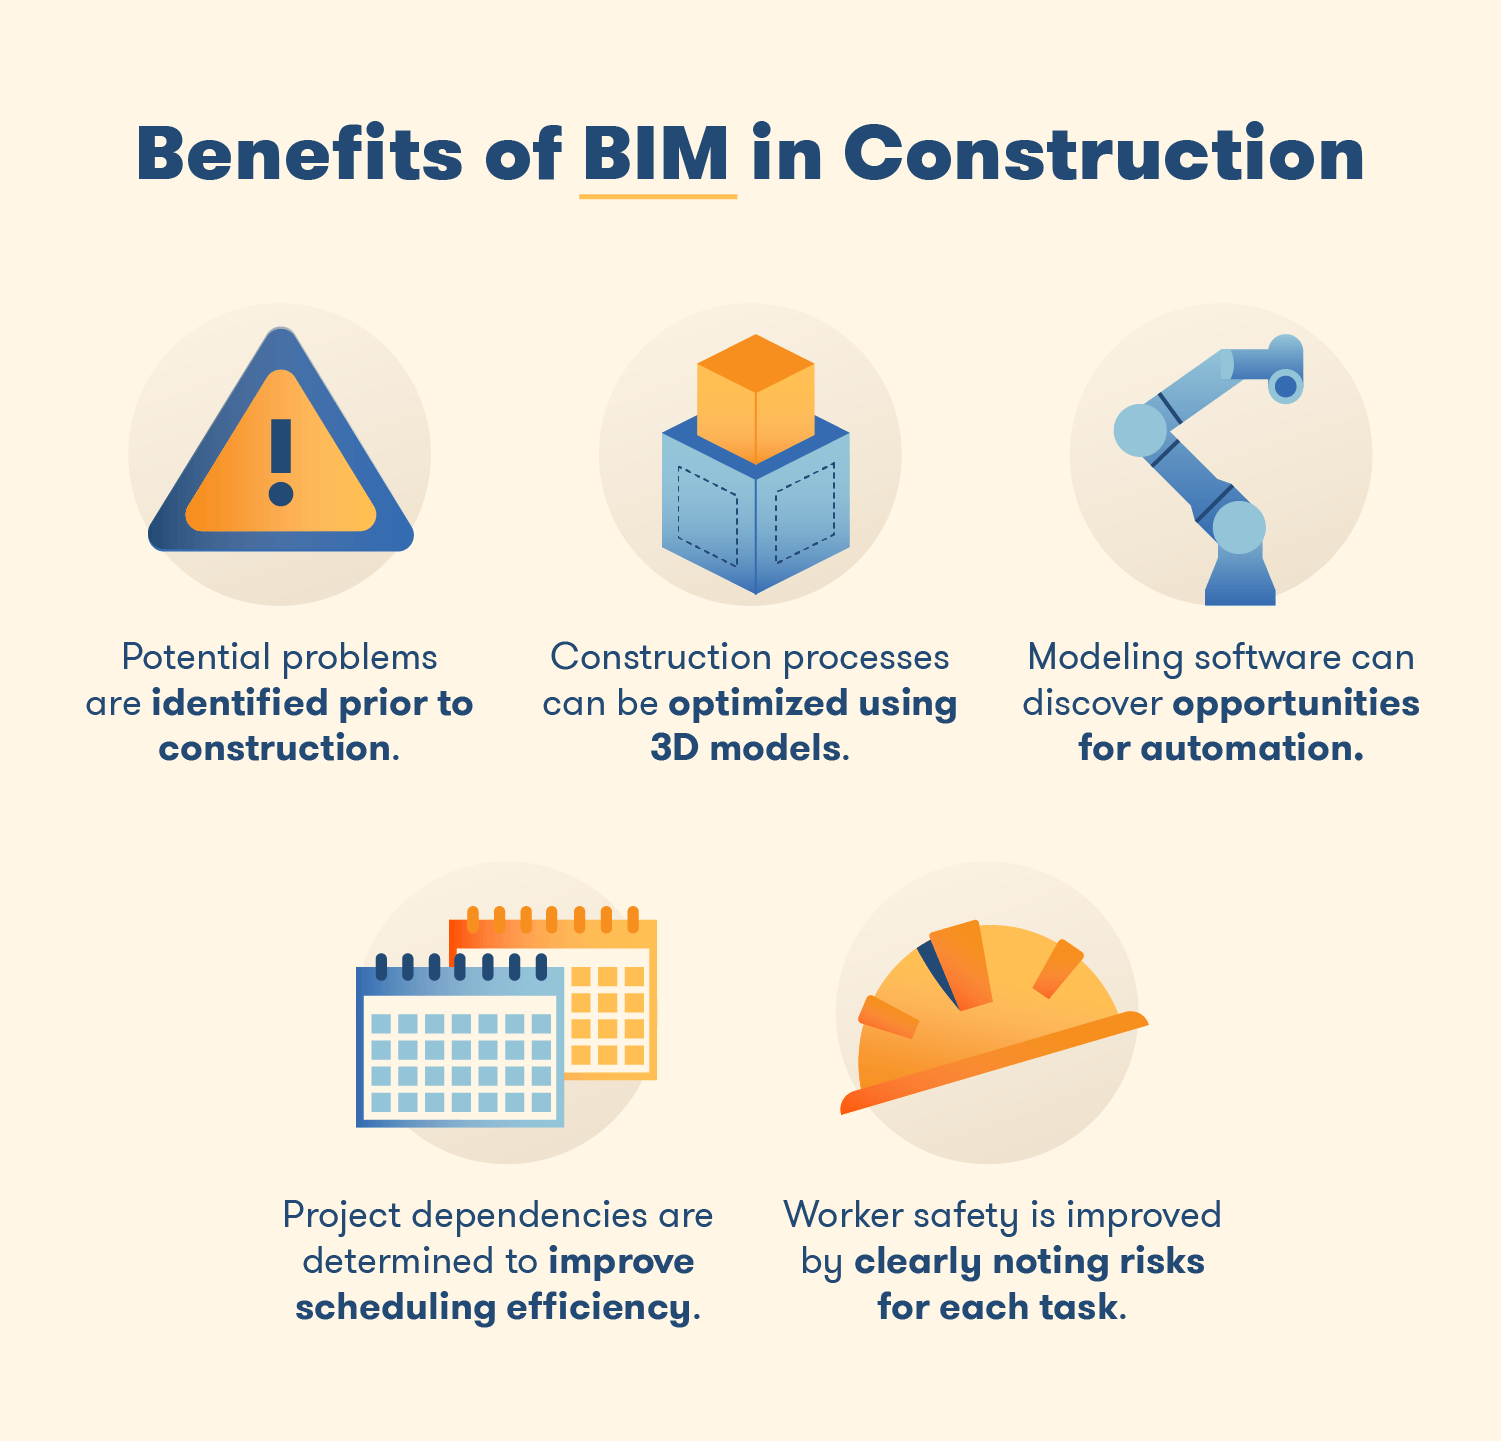 Benefits of BIM in Construction